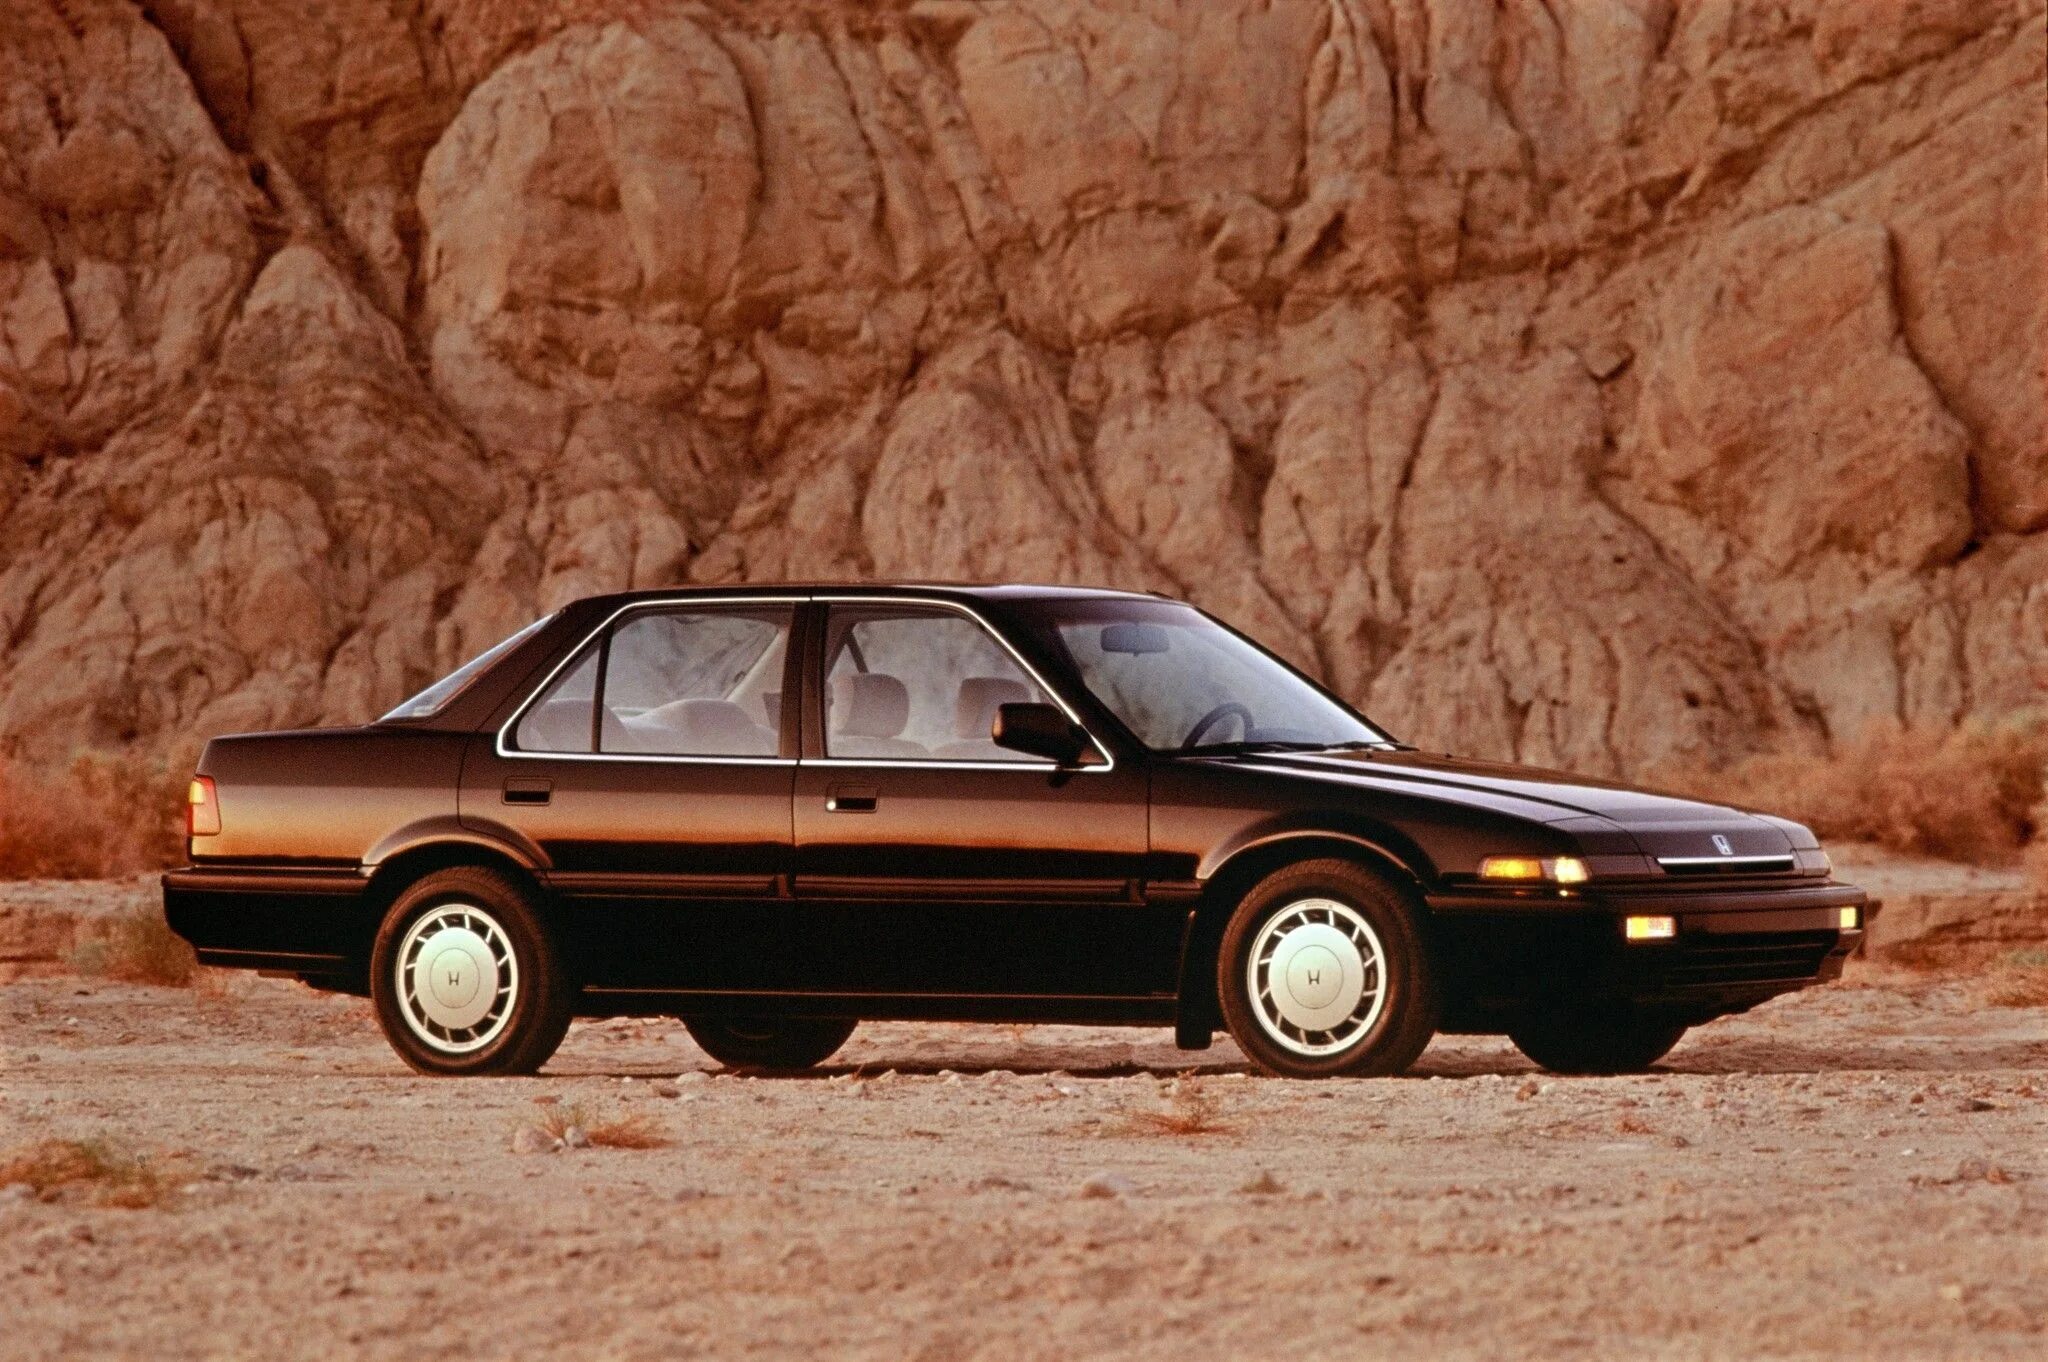 Седан Honda Accord 1985. Honda Accord 3 1988. Honda Accord 3 поколение. Honda Accord 1986 седаны. Старые honda